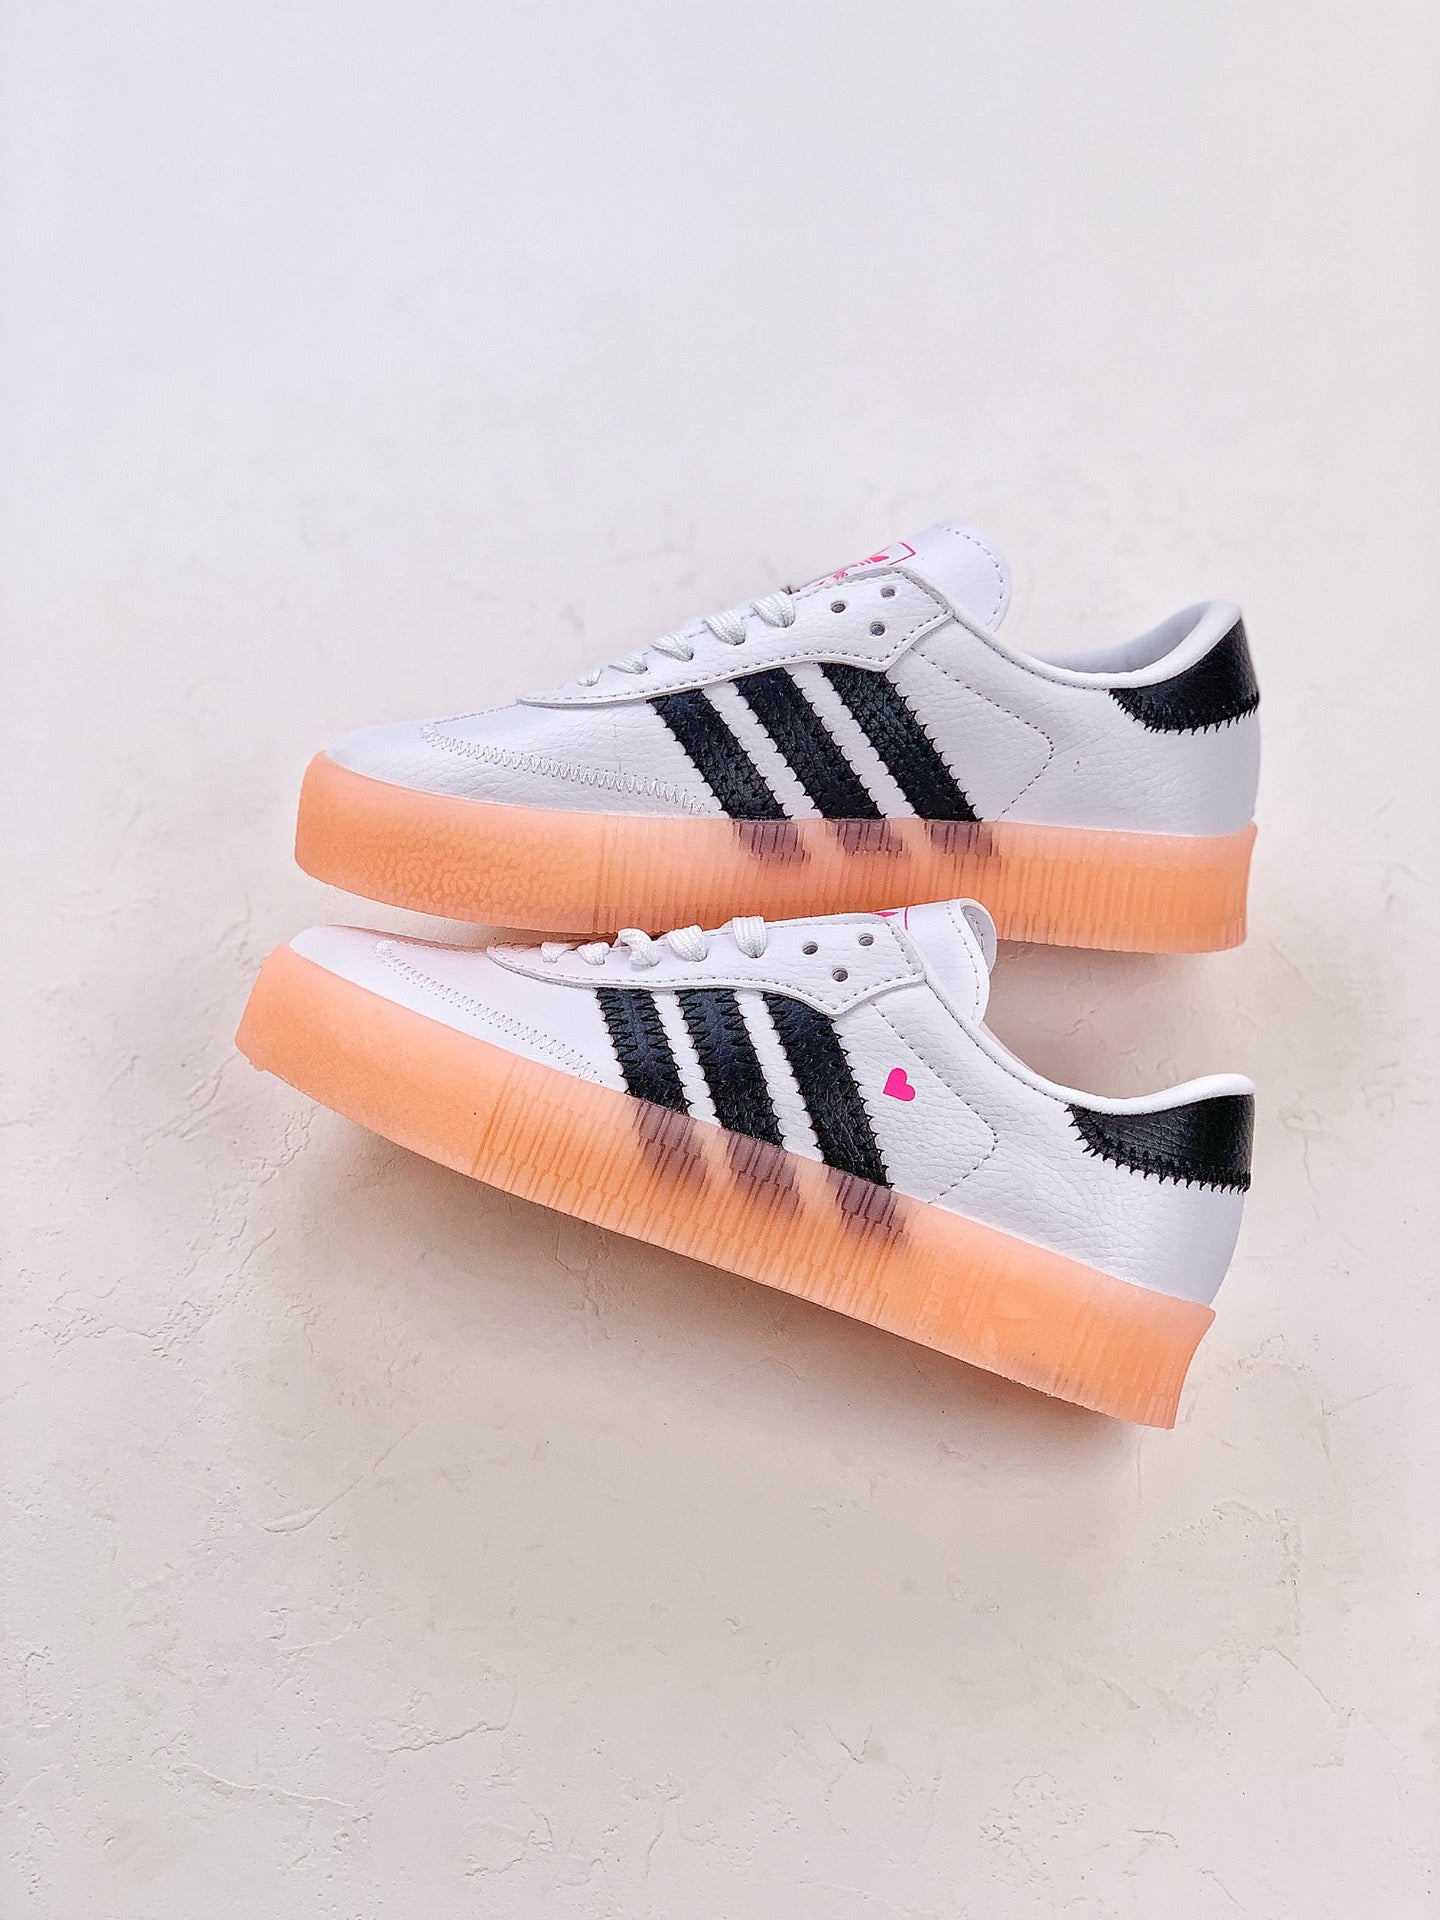 Adidas samba white/pink shoes